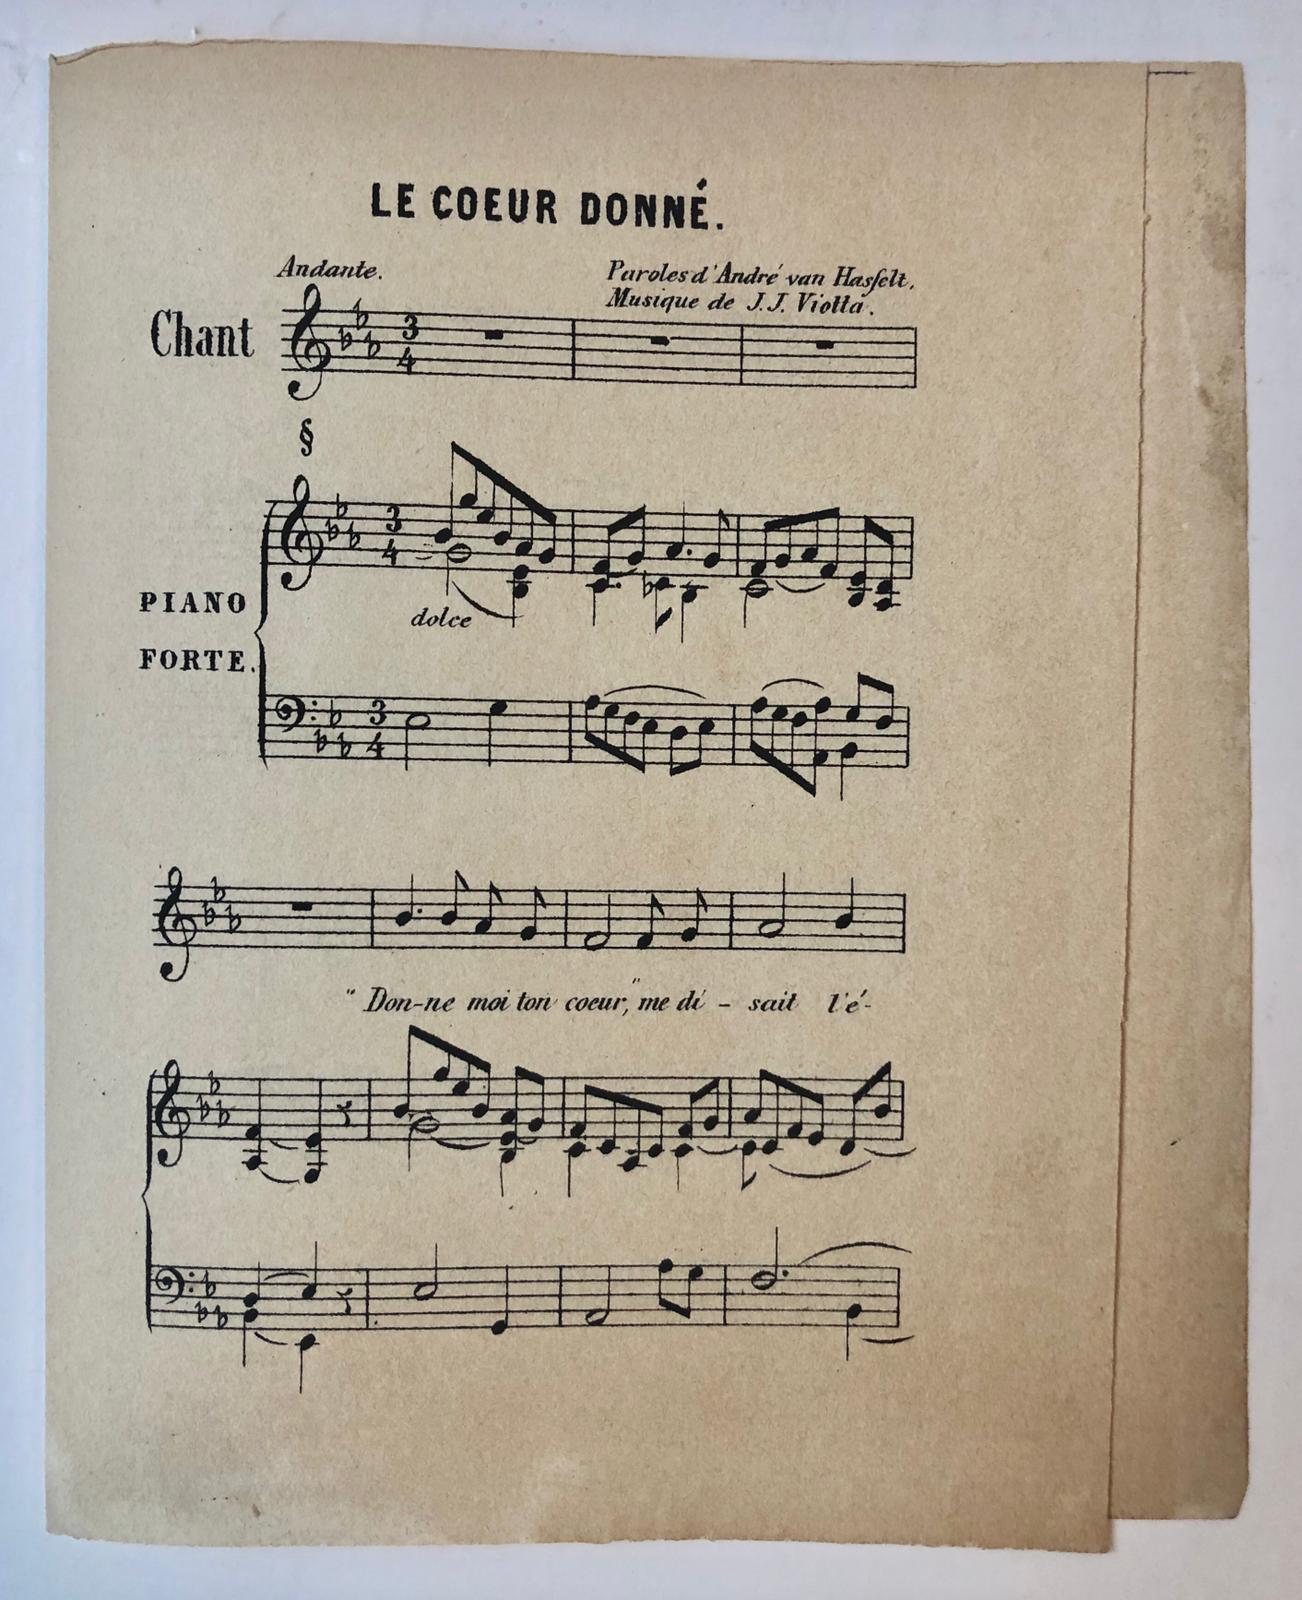  - [Sheet music 1850, Hasselt, van; Viotta] Gedrukt muziekschrift `Le Coeur donn', tekst Andr van Hasselt, muziek J.J. Viotta. 8(: 4 p., ca. 1850.